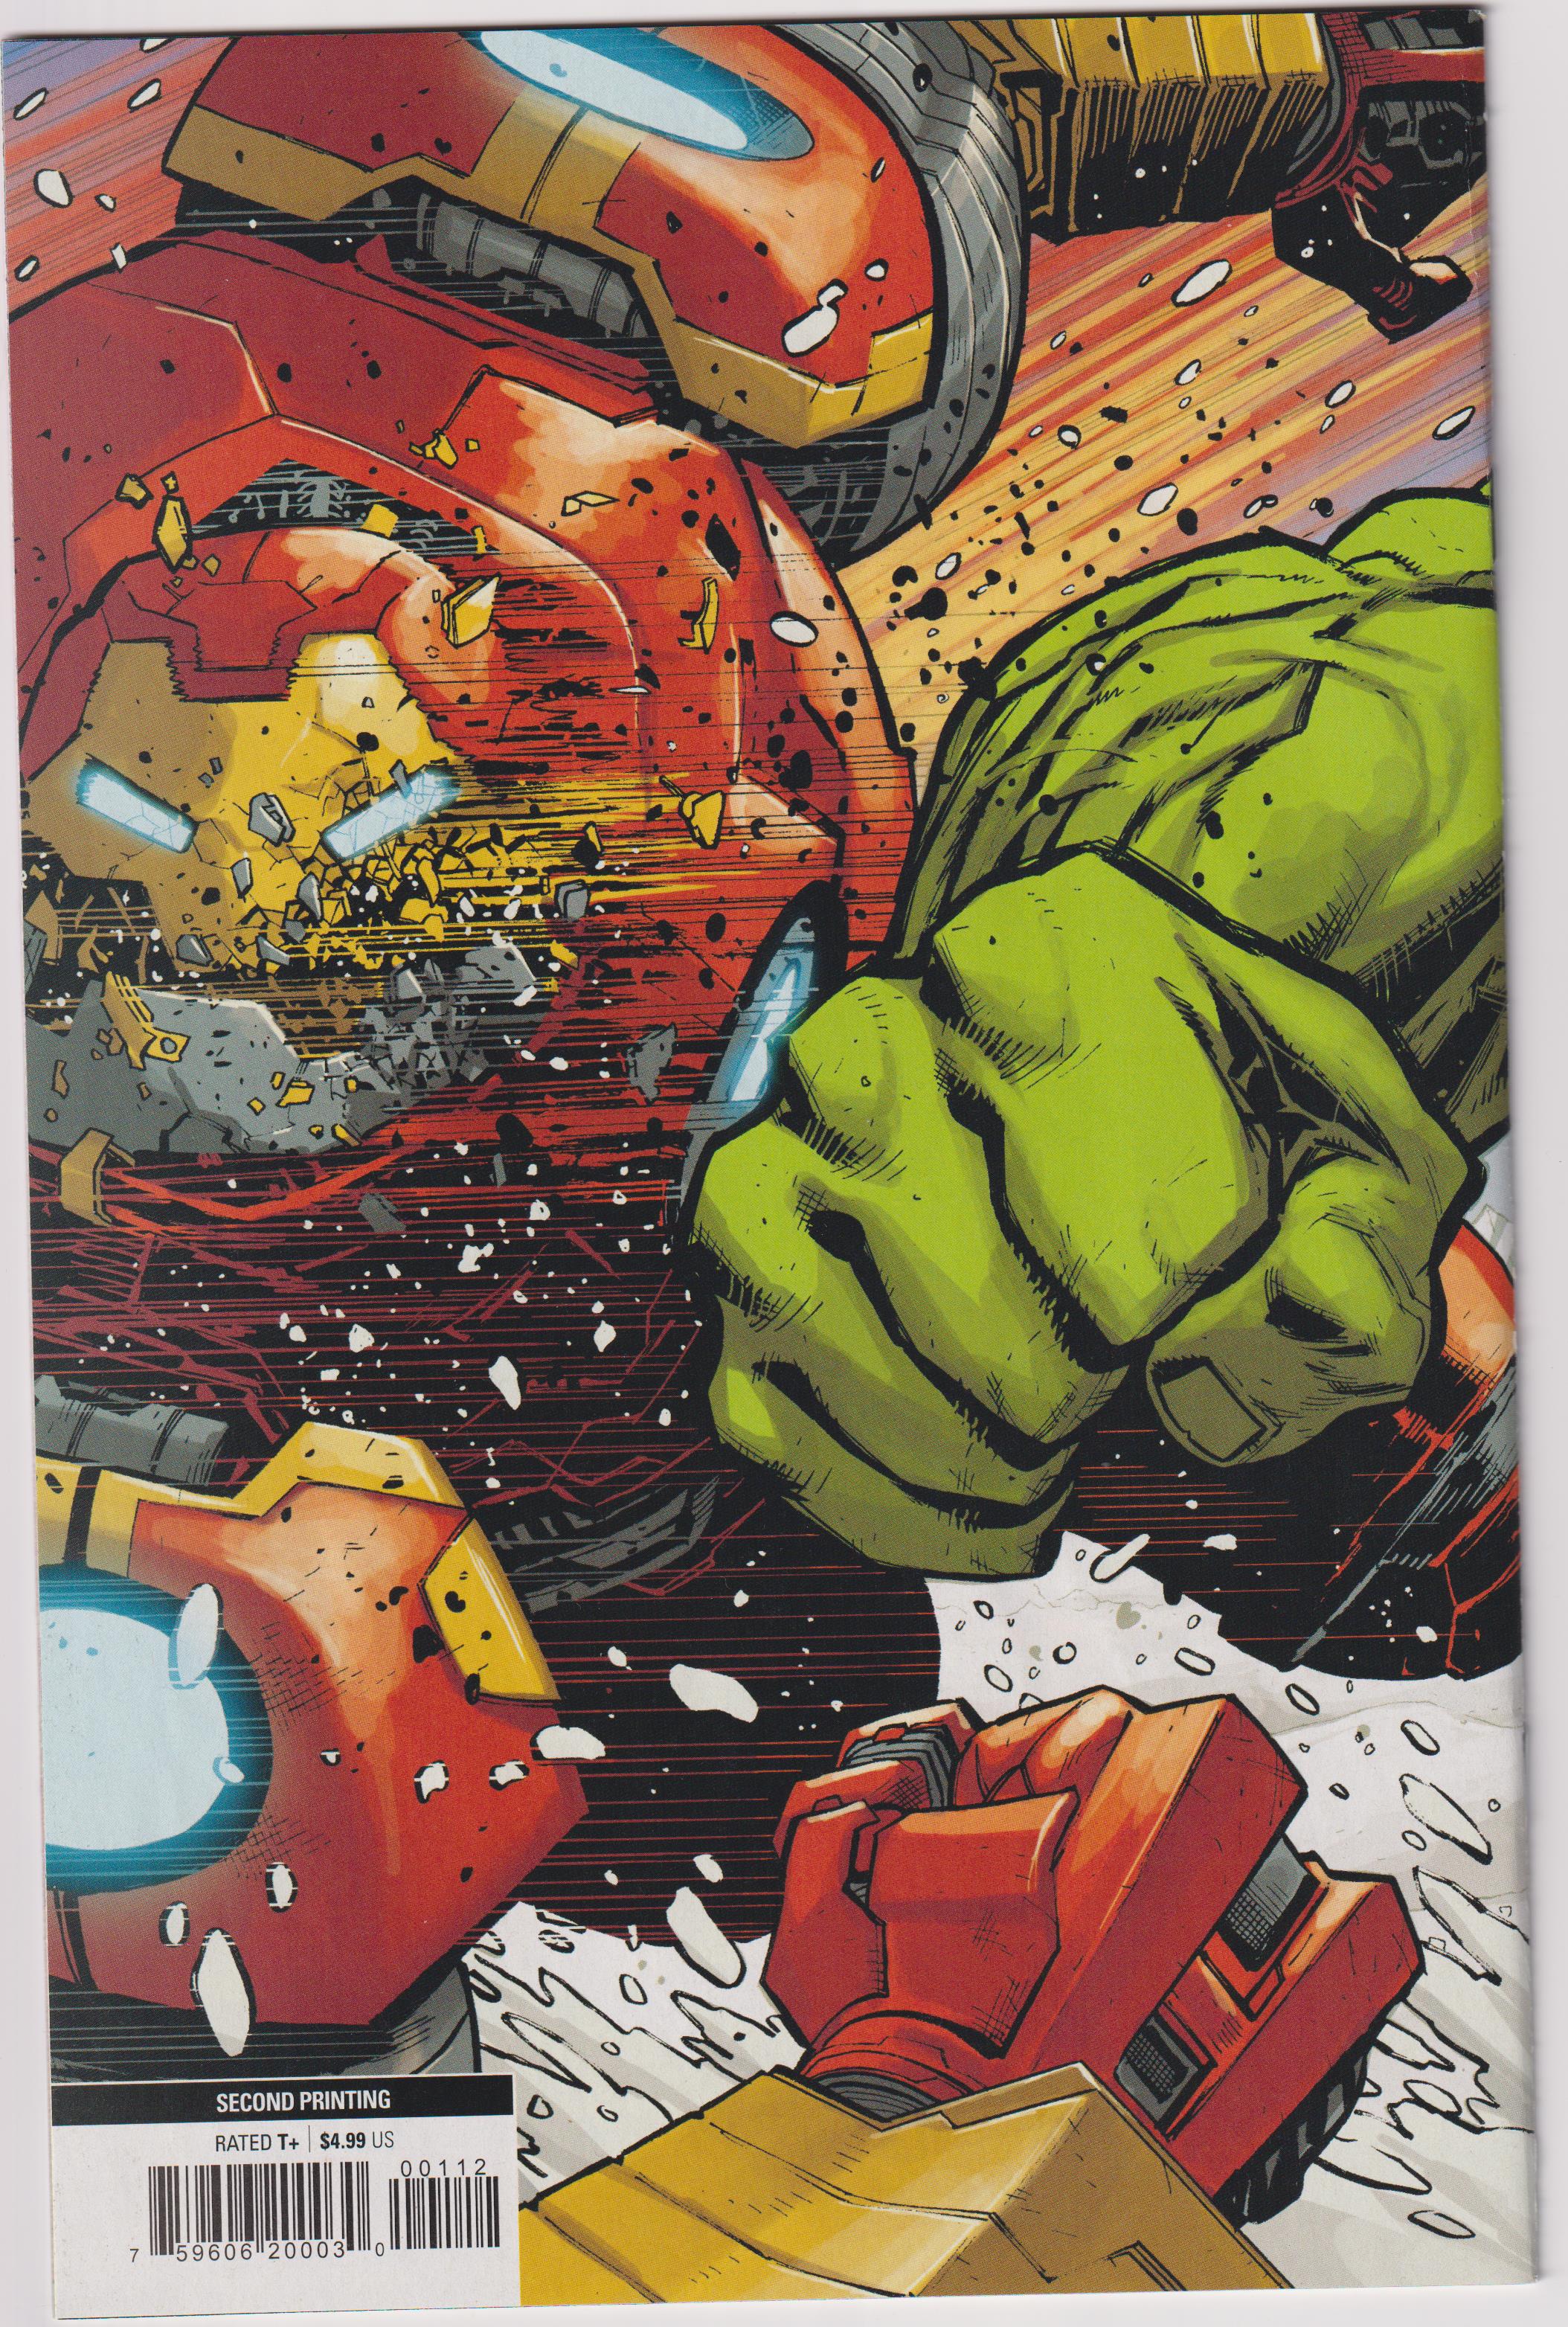 Hulk #1 2022 Marvel Comics Wraparound Cover